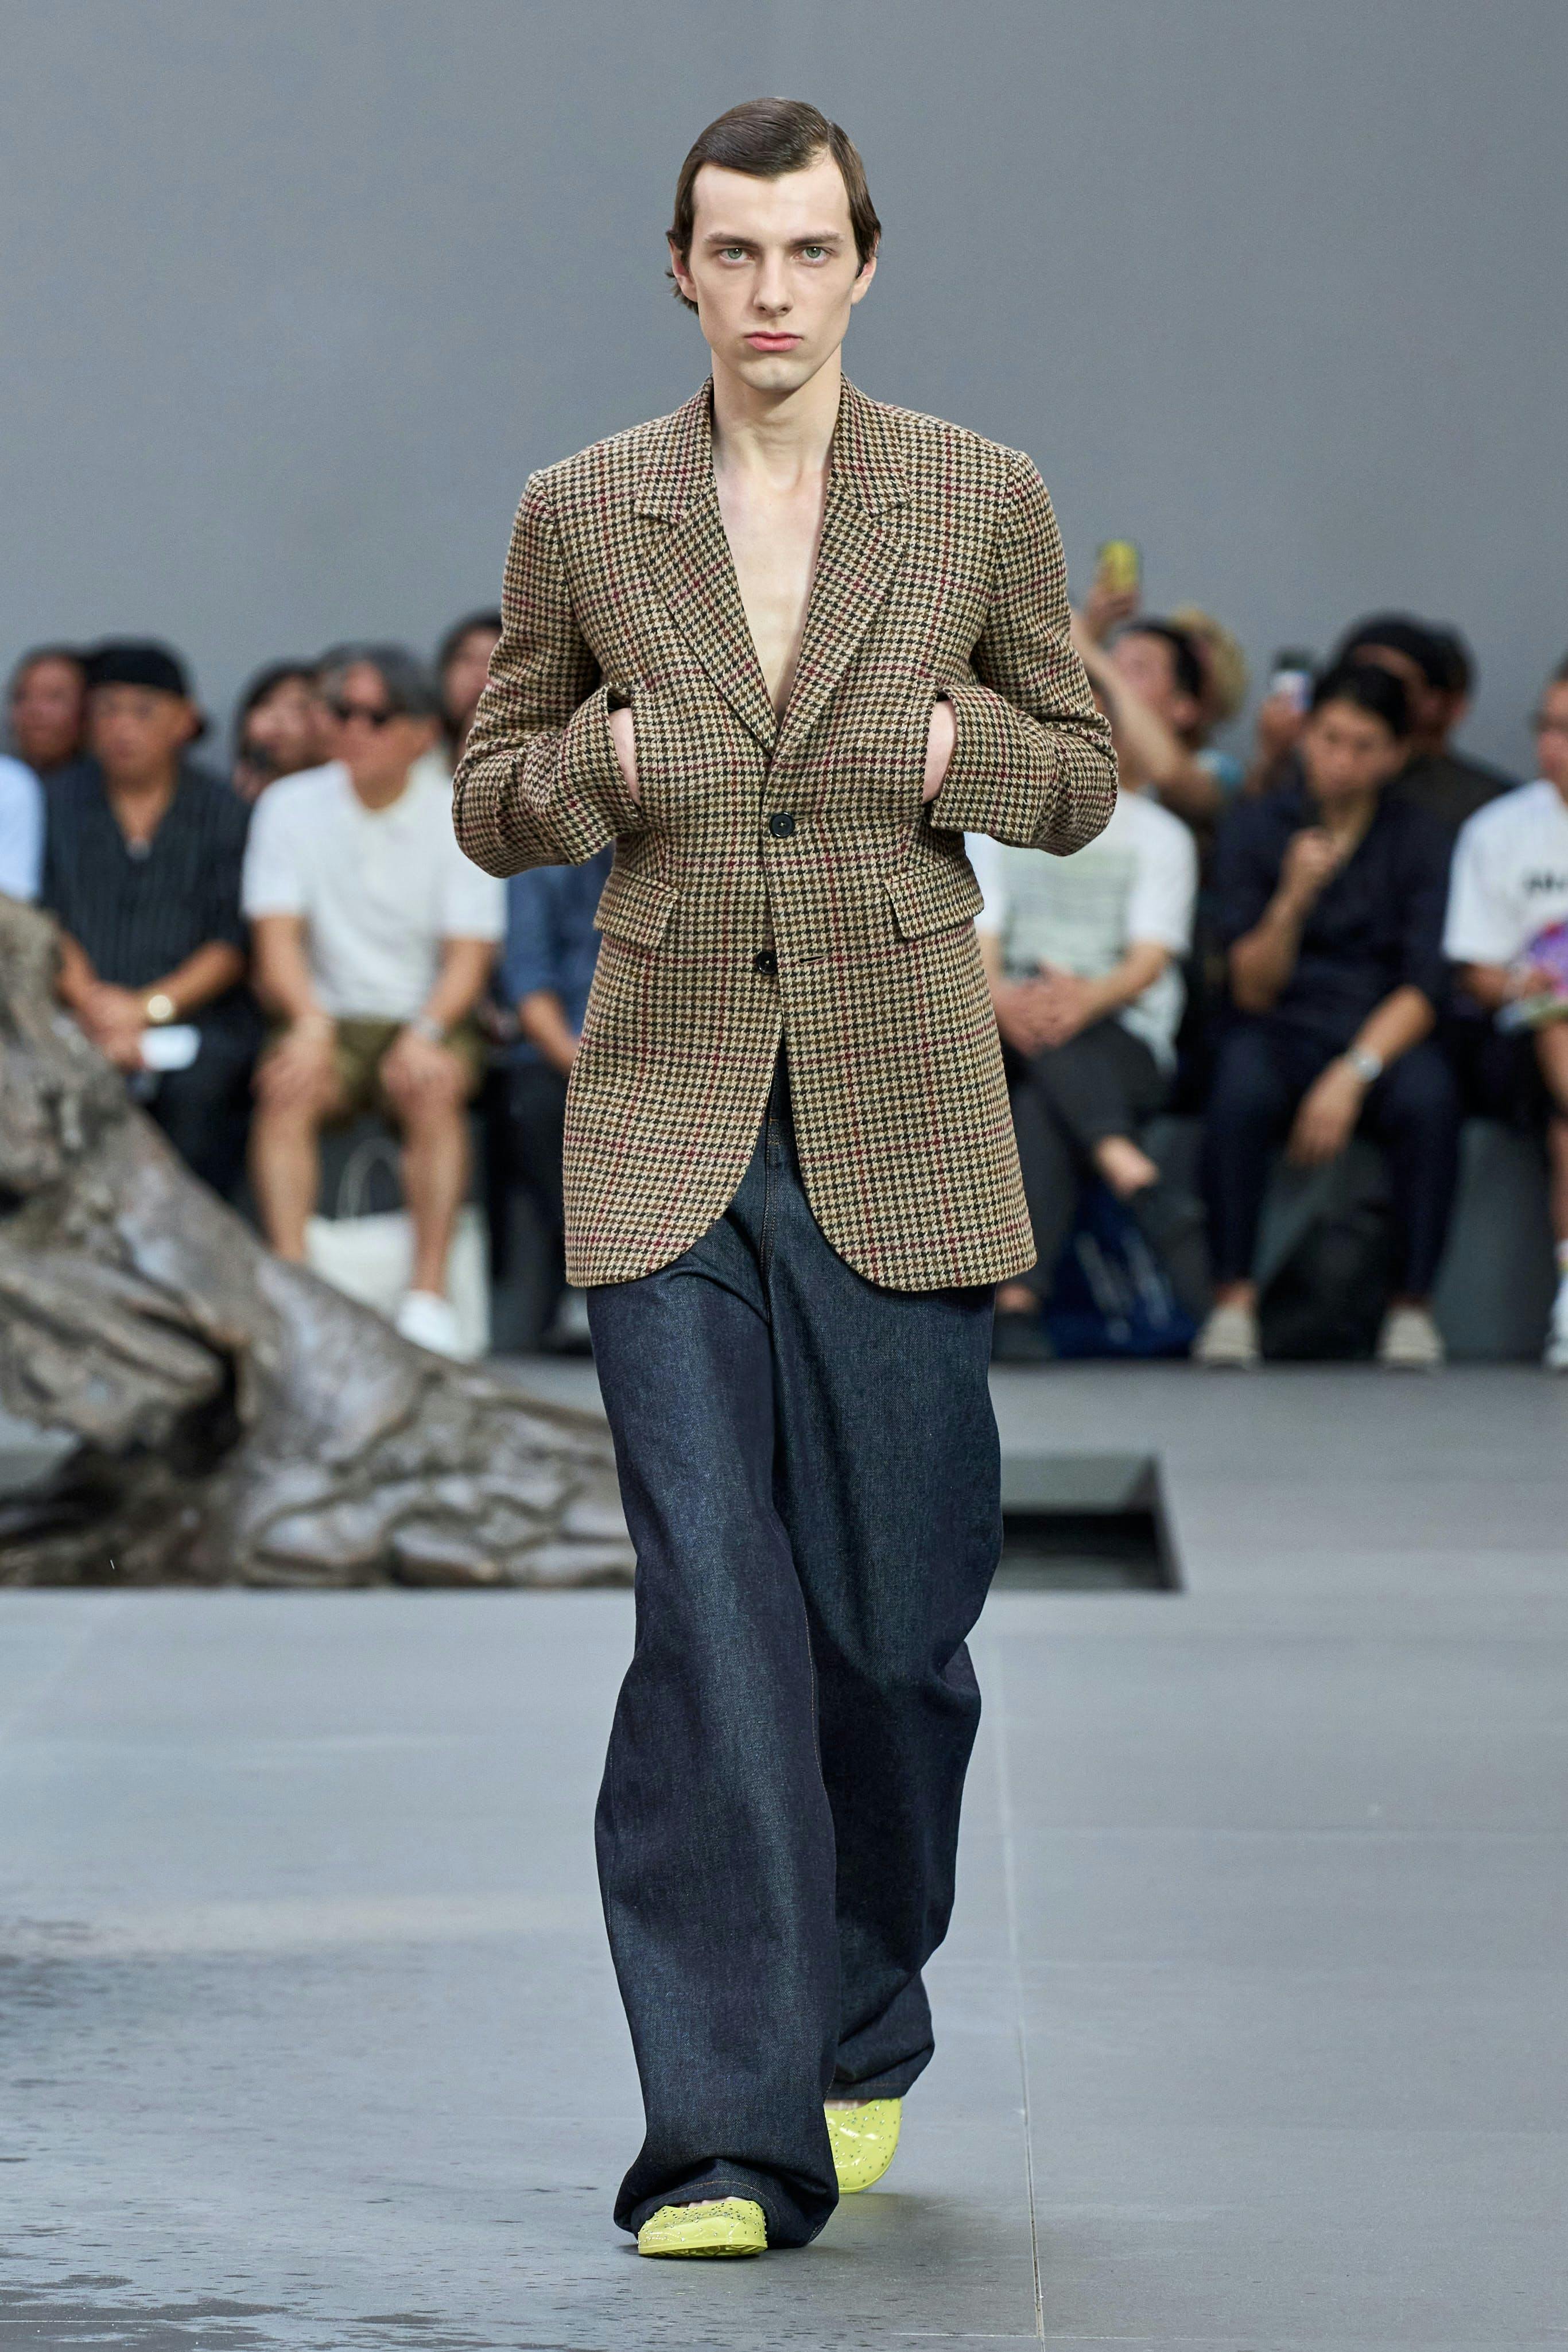 fashion coat jacket blazer formal wear suit adult male man person